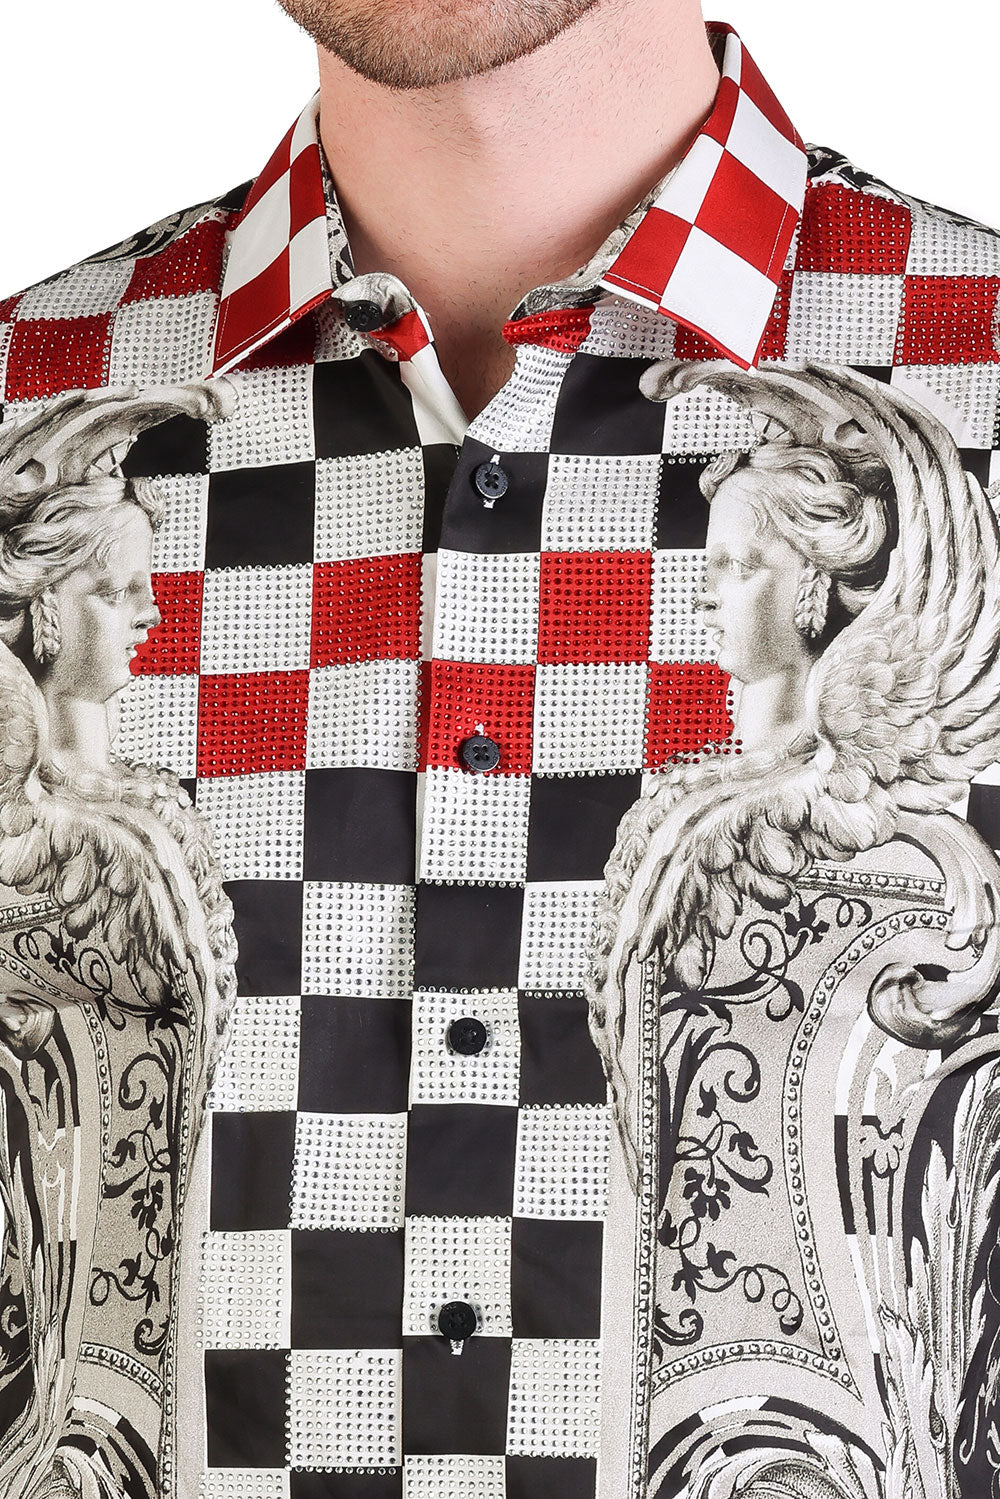 Barabas Men's Baroque Rhinestone Checkered Short Sleeve Shirts SSR20 black red